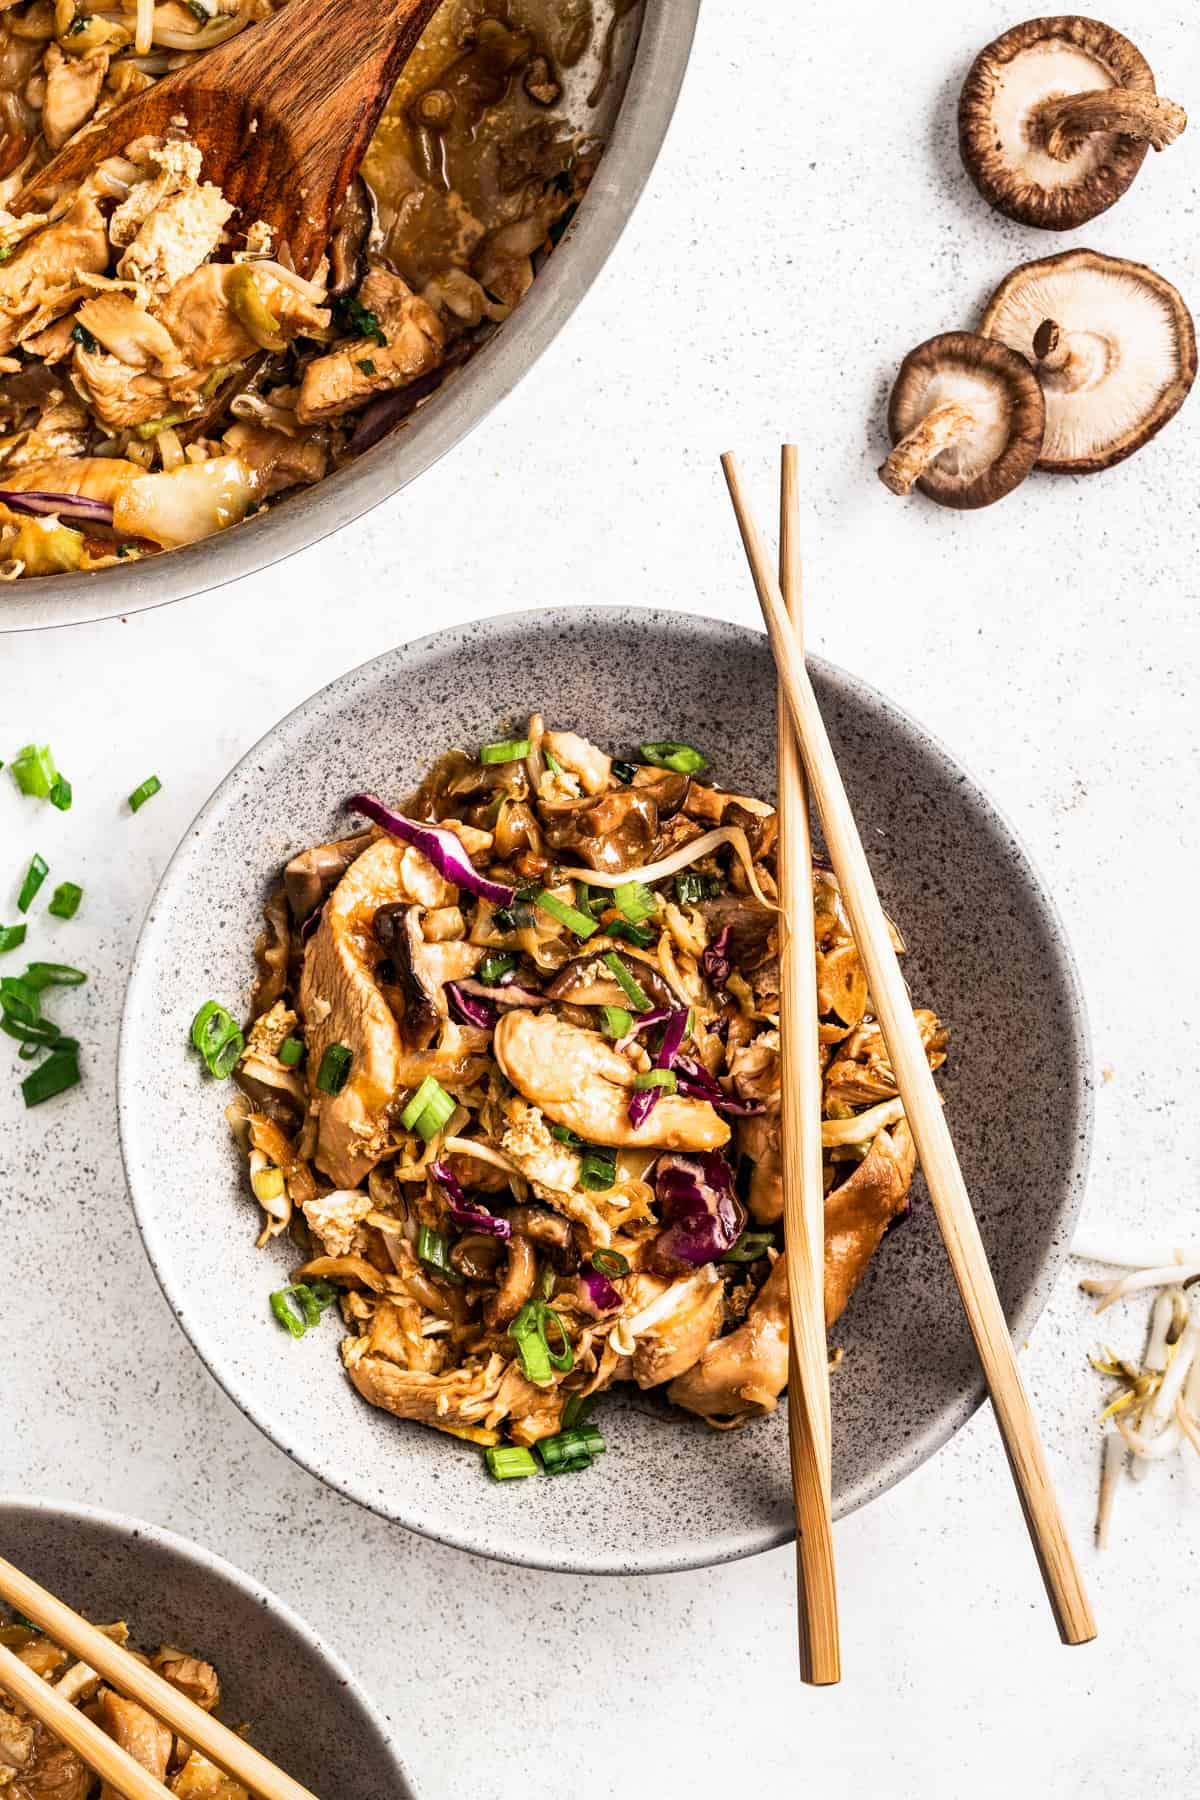 Moo shu chicken in a bowl with chopsticks near a pan of moo shu chicken.